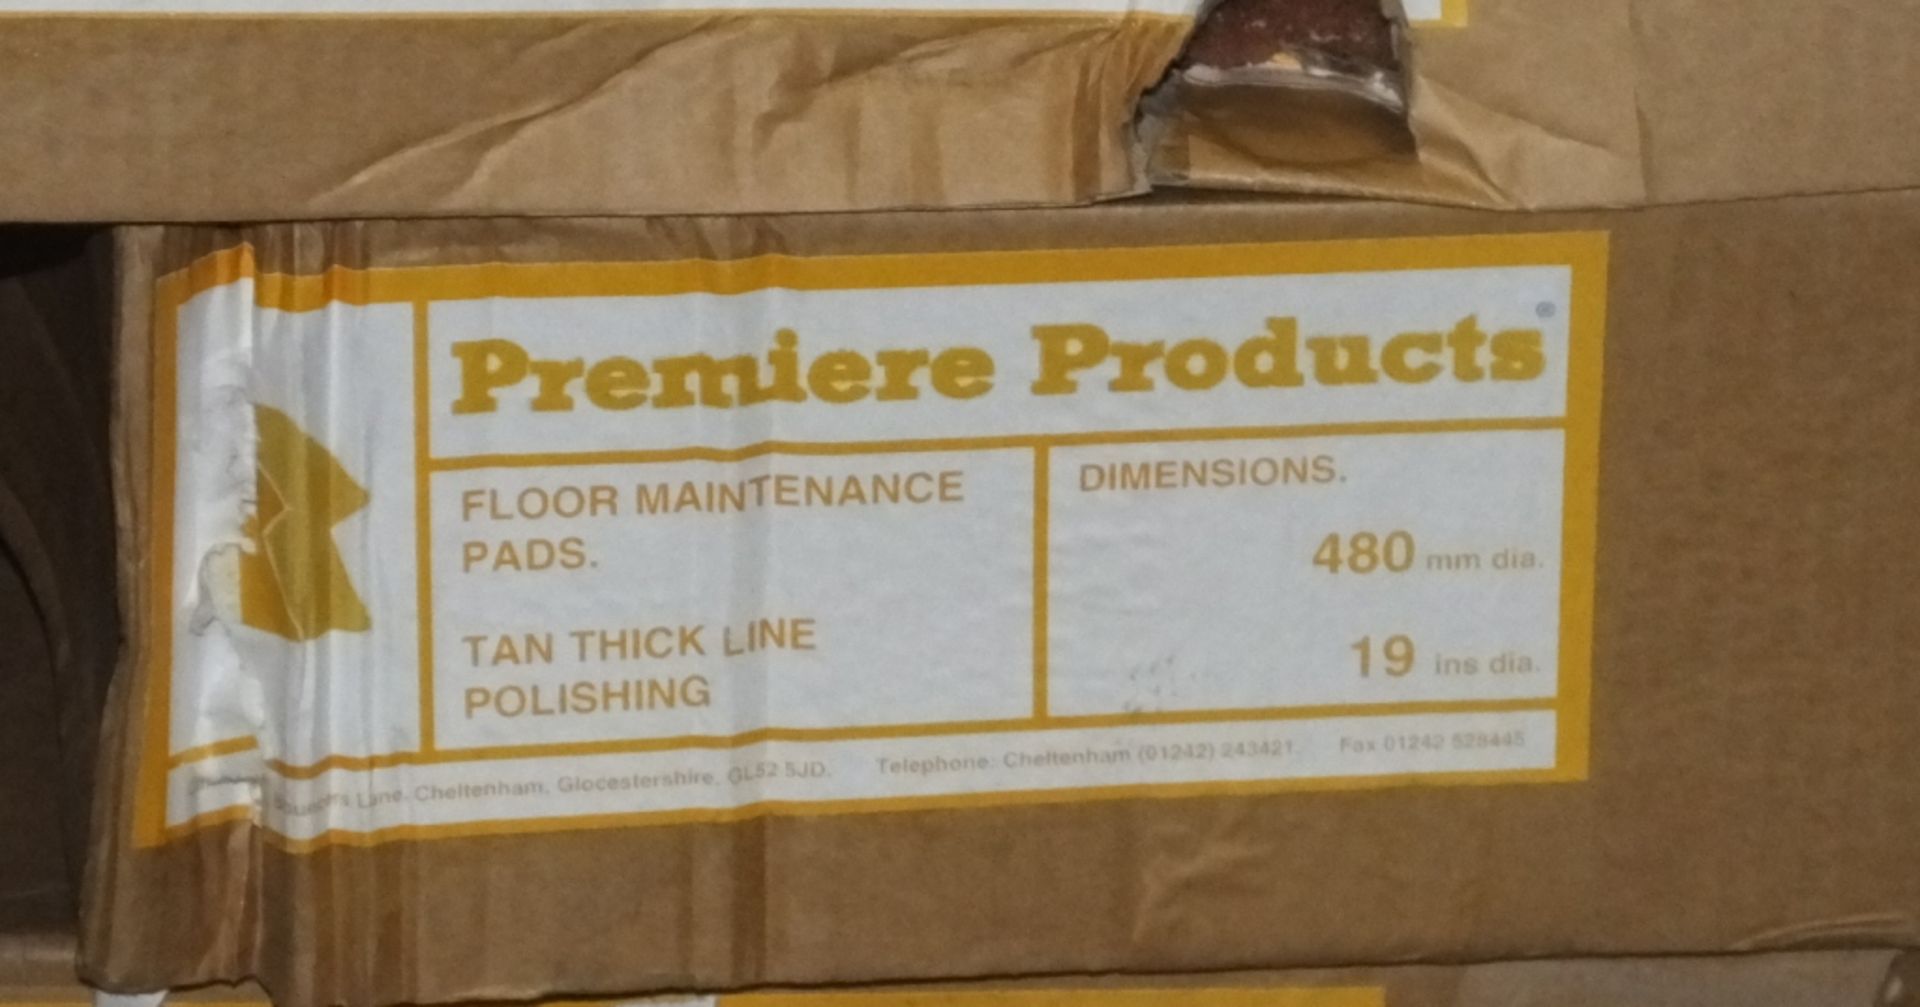 Floor Maintenance pads - Tan Thick Line Polishing - 5 per box - 15 boxes - Image 2 of 2